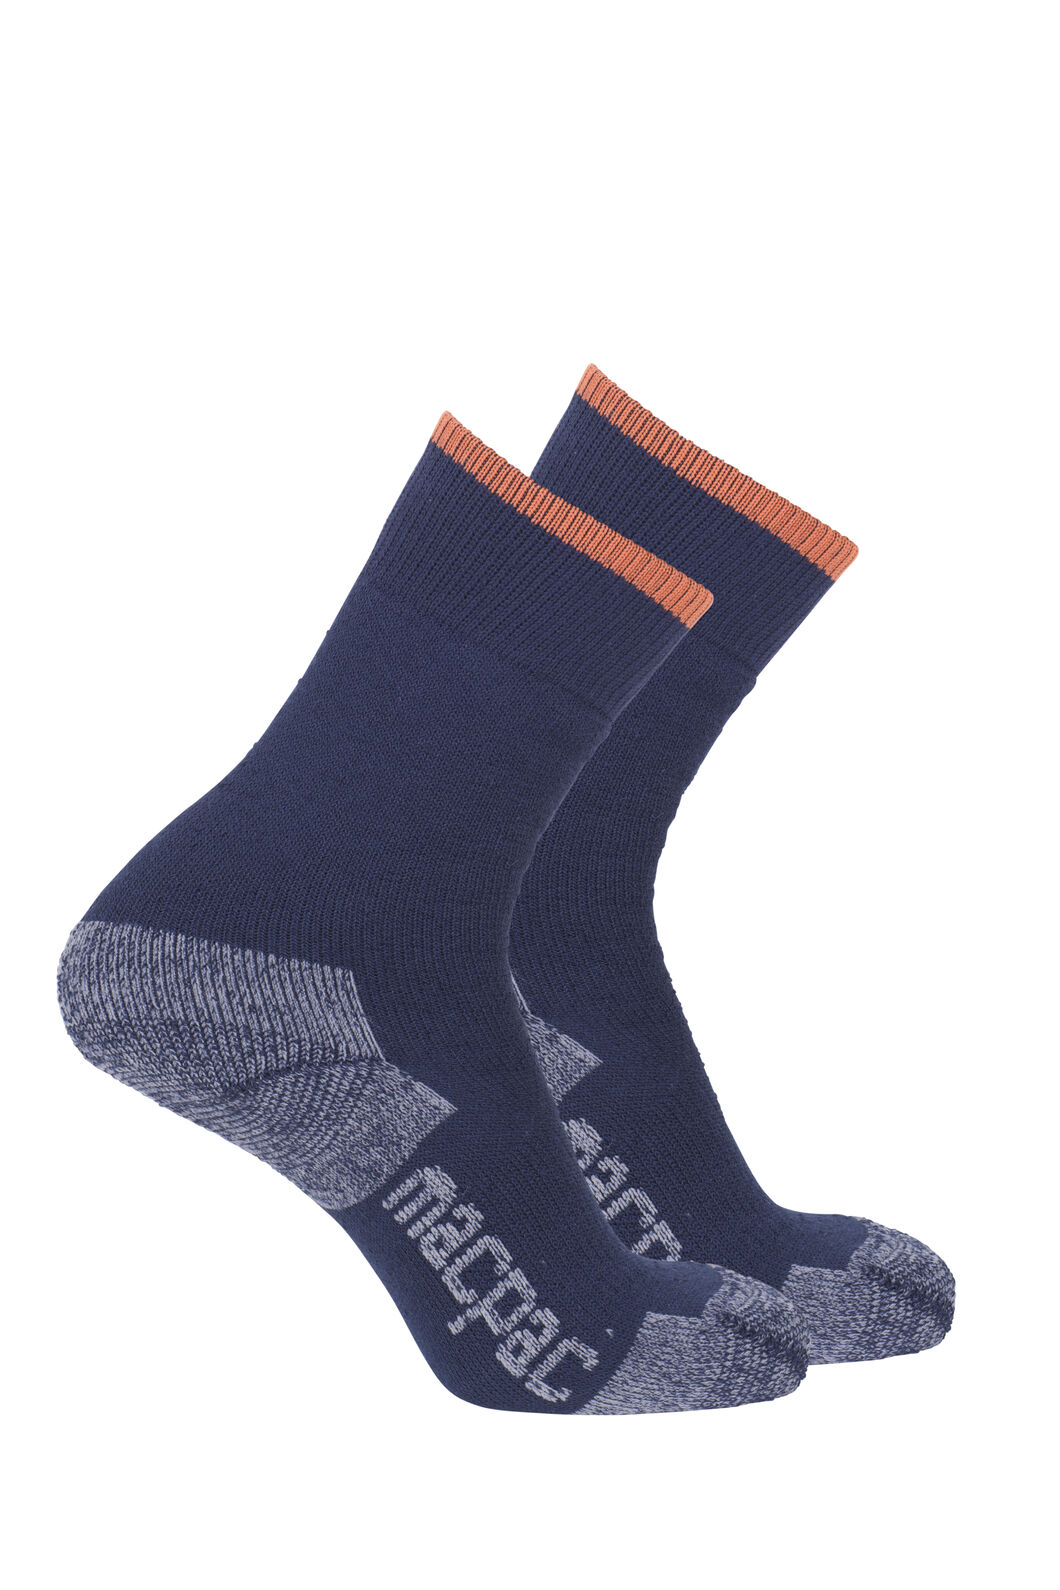 Macpac Thermal Socks 2 Pack